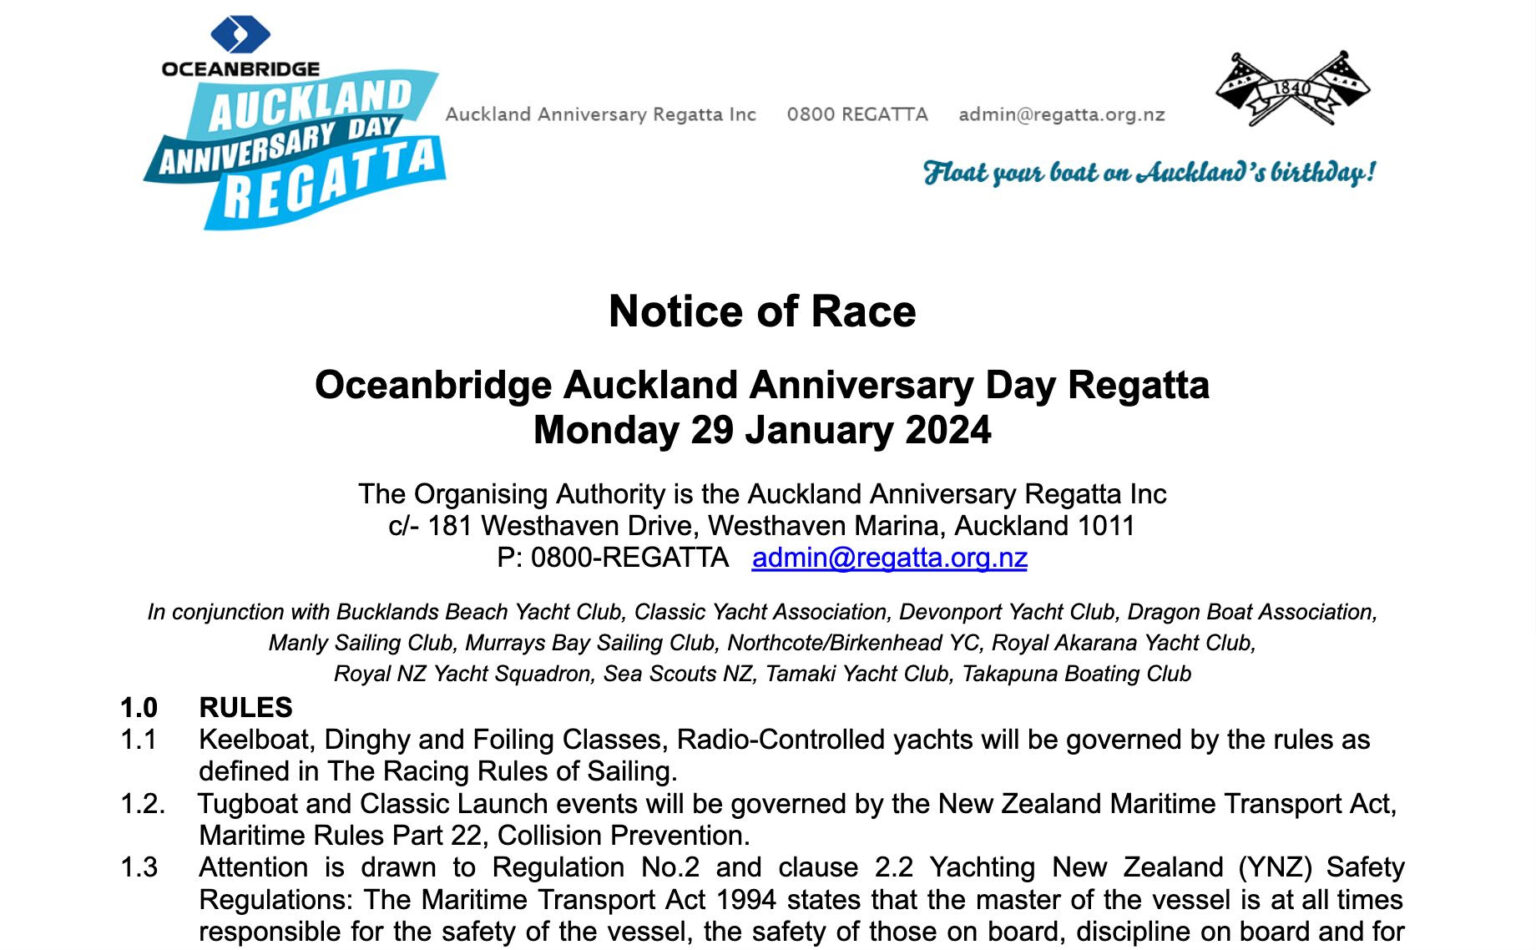 Enter now for the 2024 Oceanbridge Auckland Anniversary Day Regatta